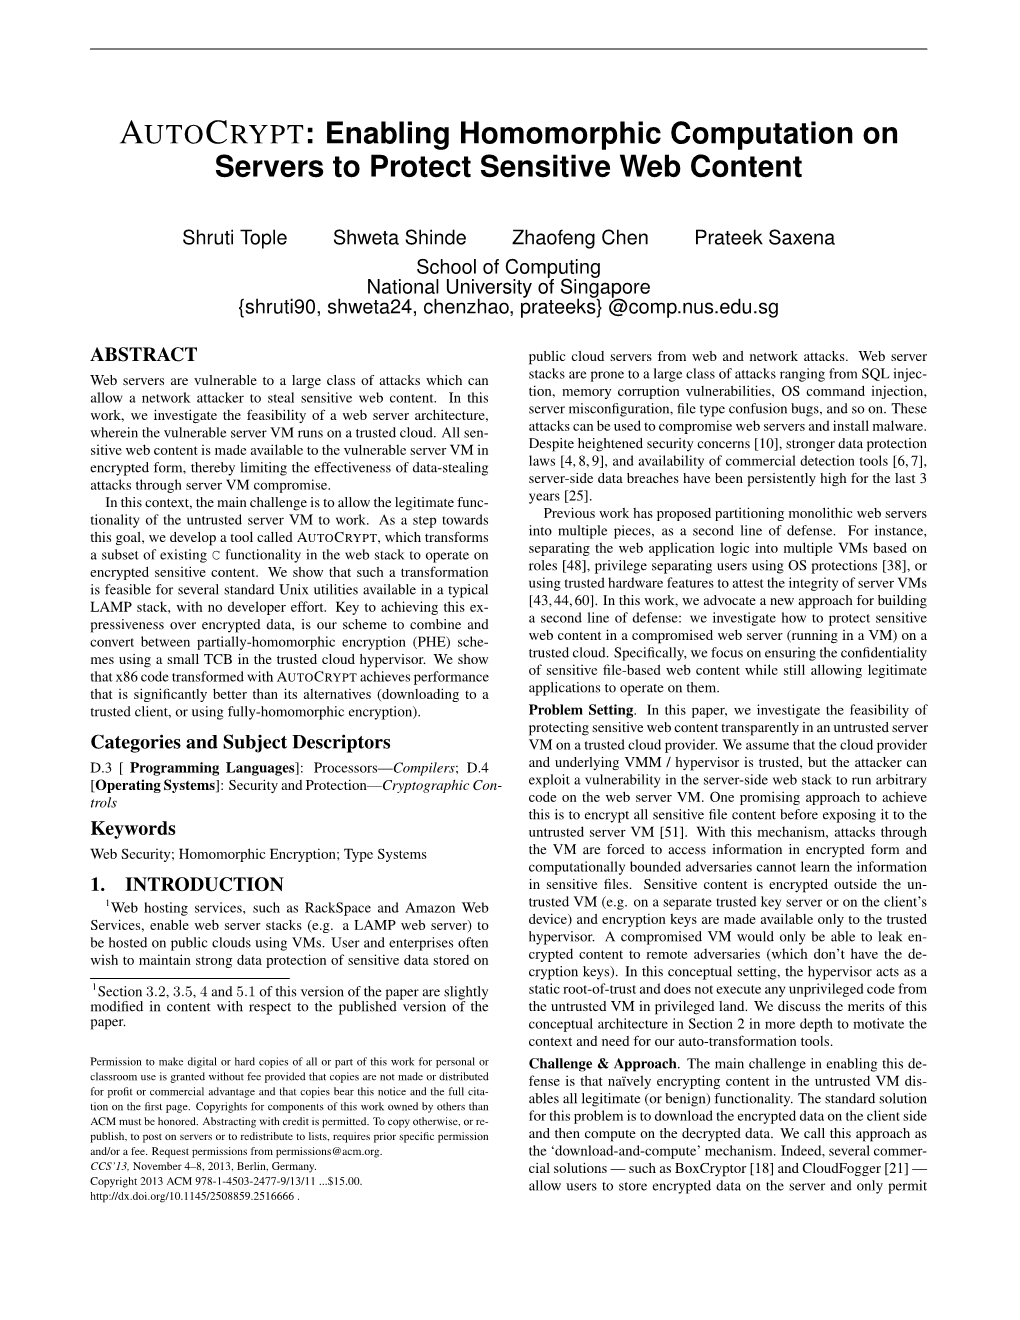 AUTOCRYPT: Enabling Homomorphic Computation on Servers to Protect Sensitive Web Content